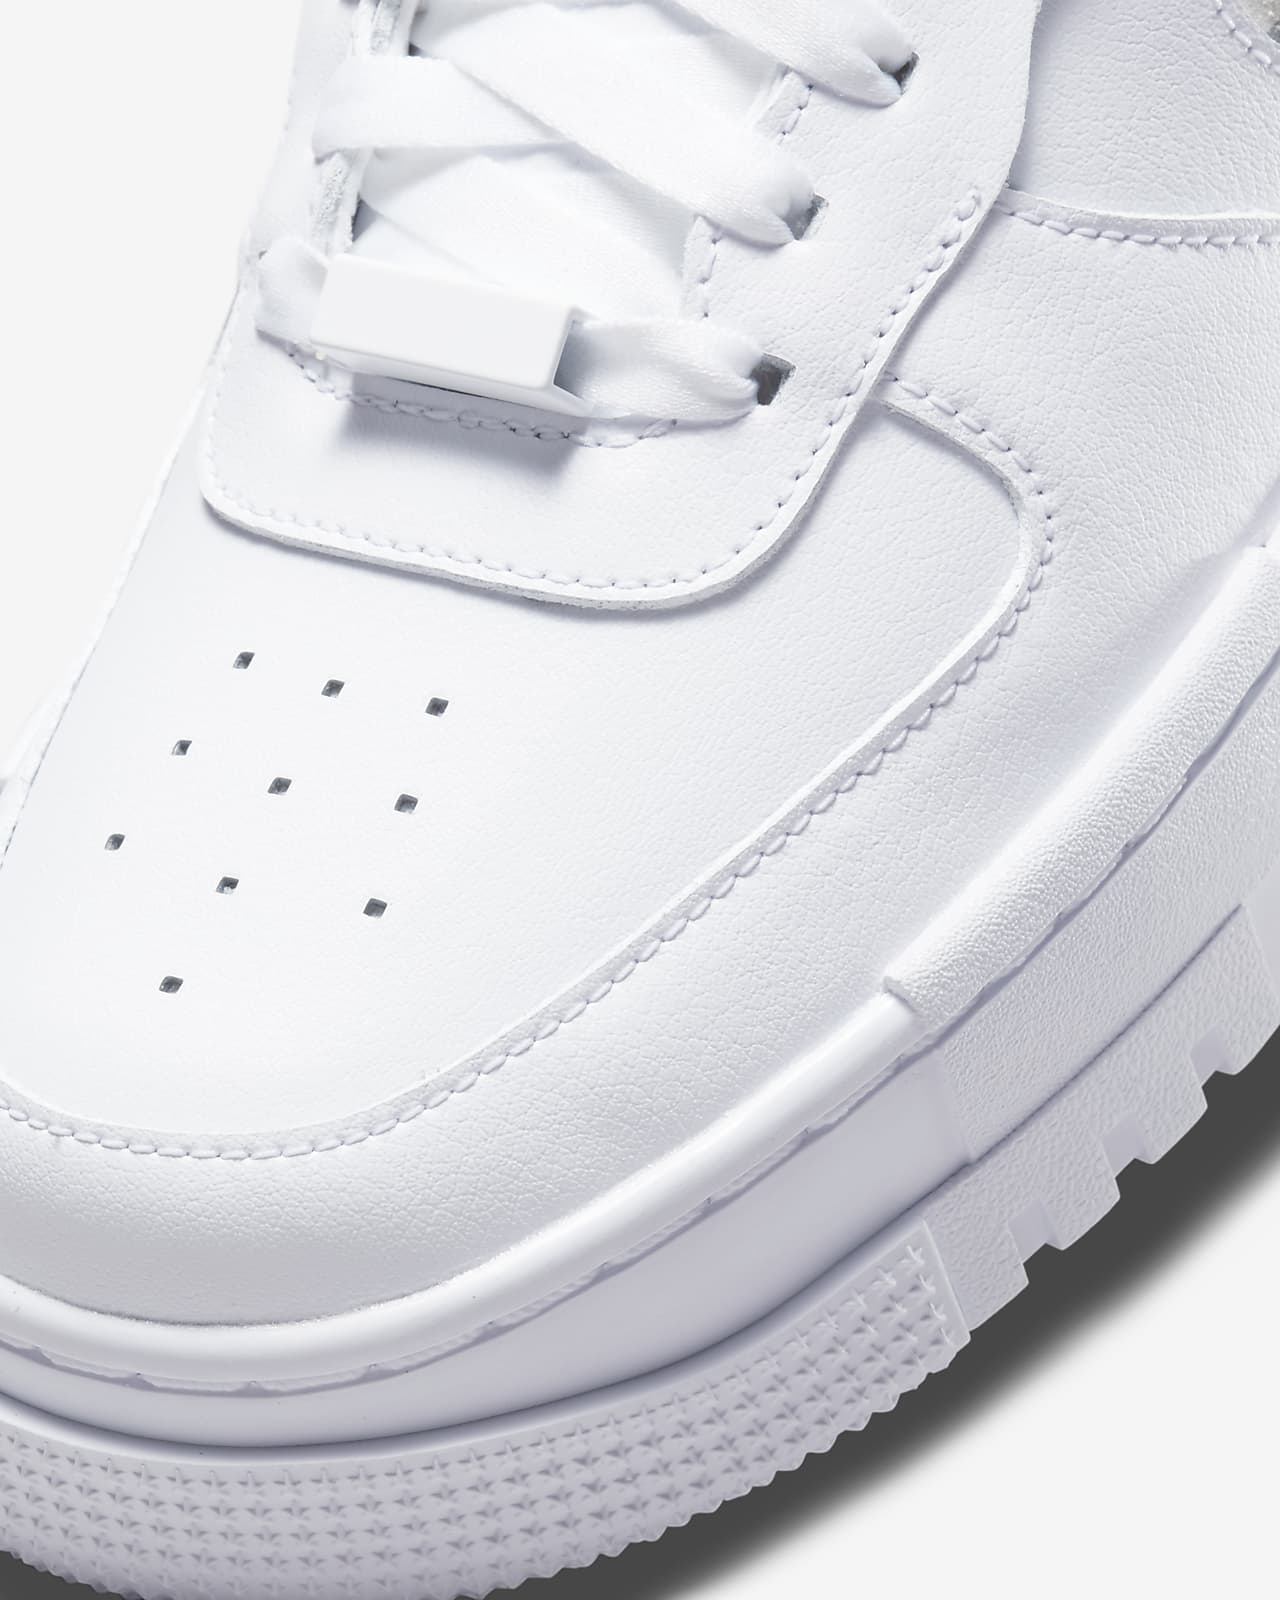 Nike Air Force 1 Pixel SE Women's Shoes